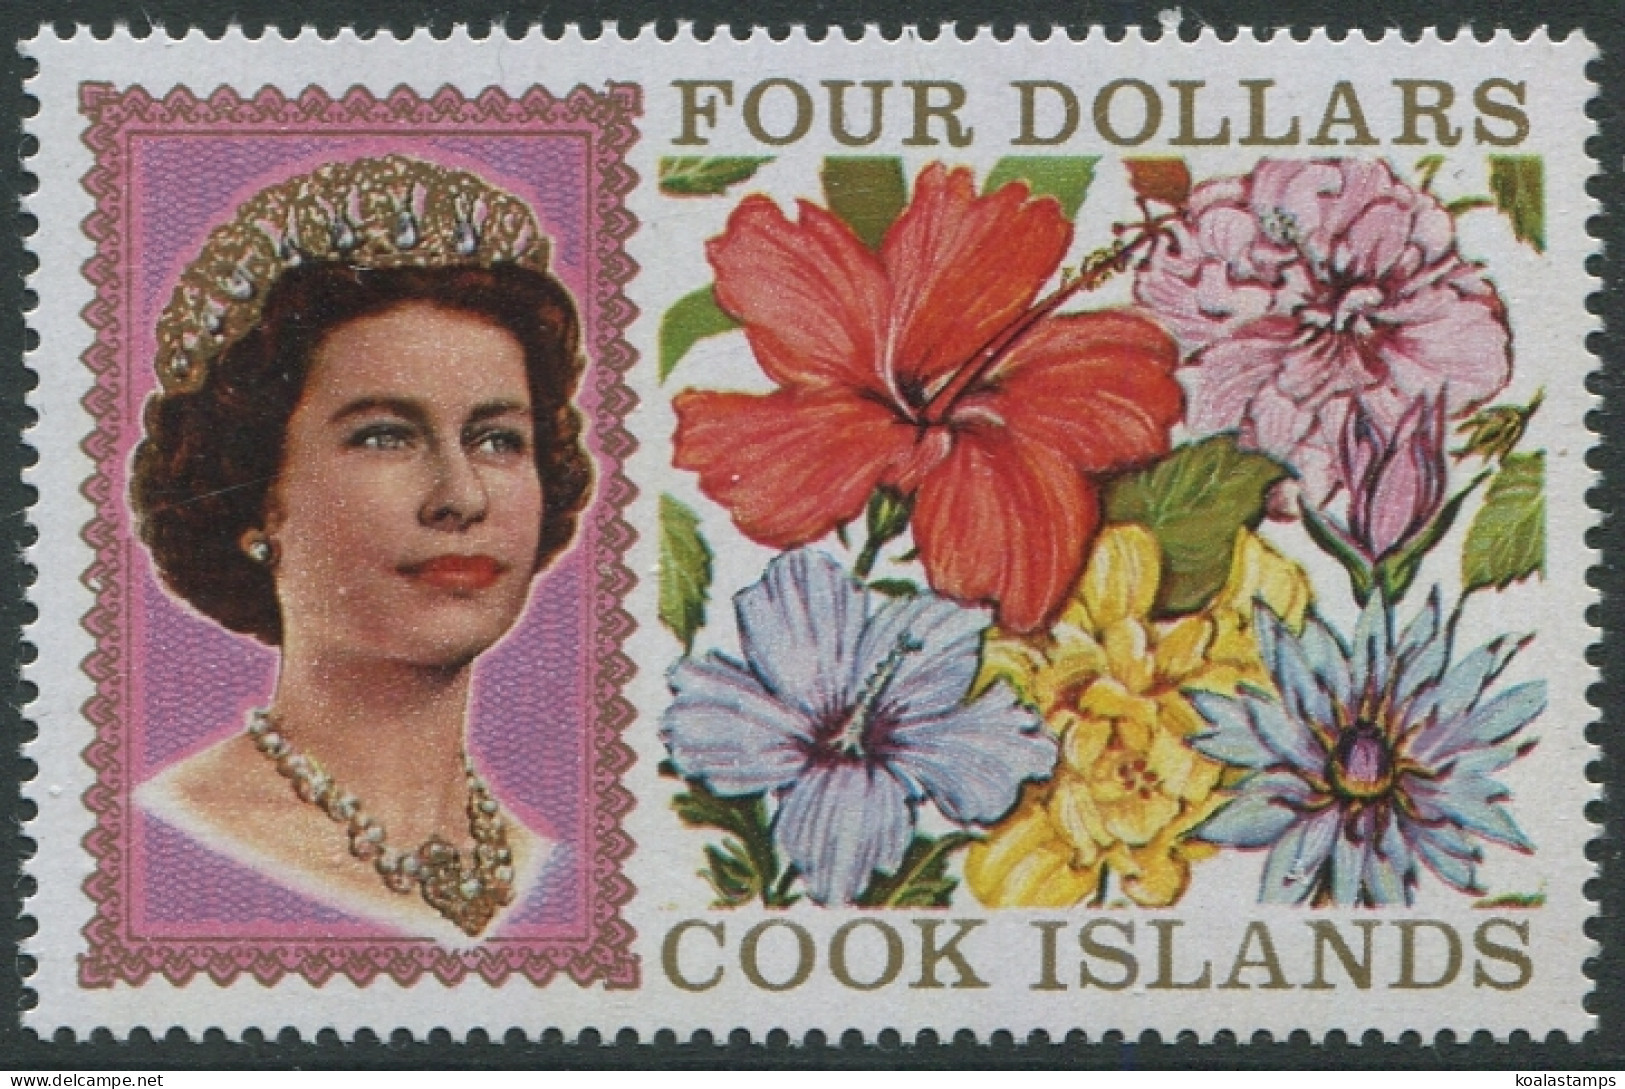 Cook Islands 1967 SG246A $4 QEII Flowers MNH - Cook Islands